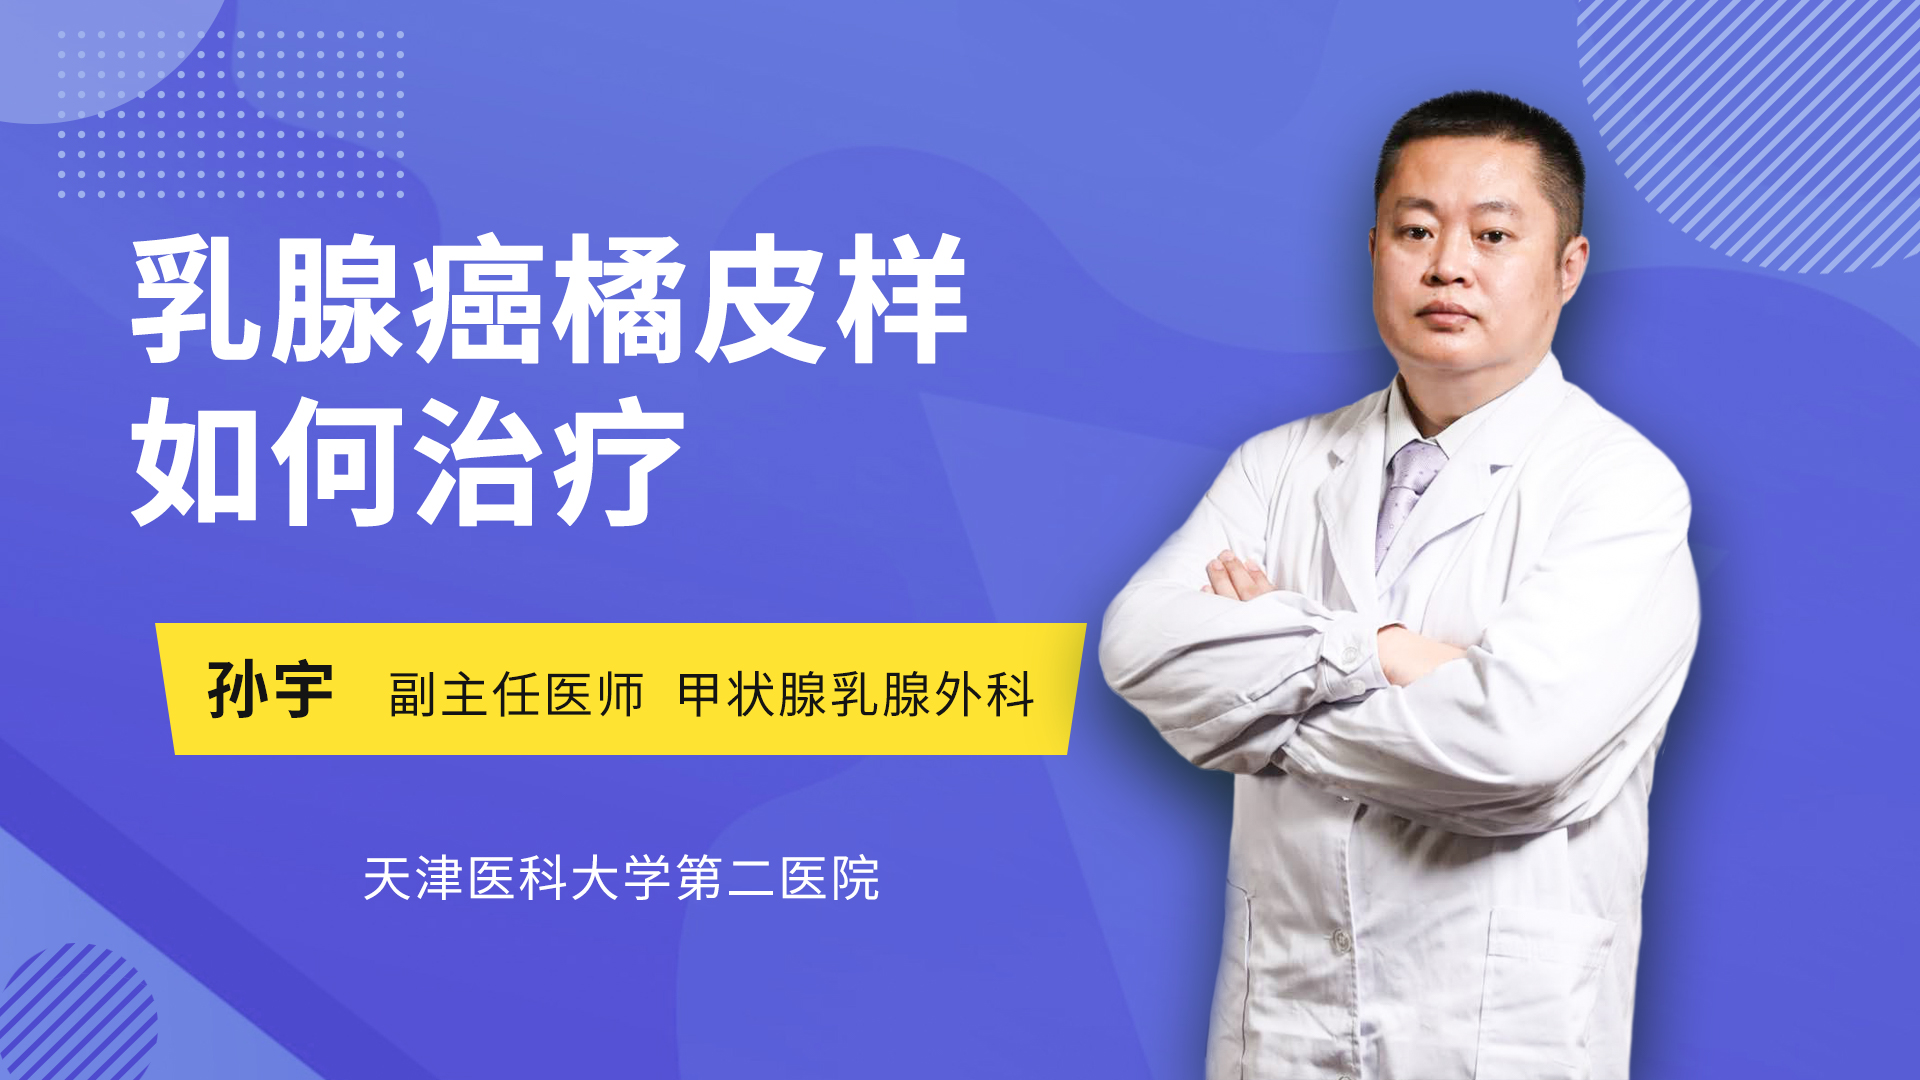 Hs 578T人乳腺癌细胞-南京科佰生物科技有限公司